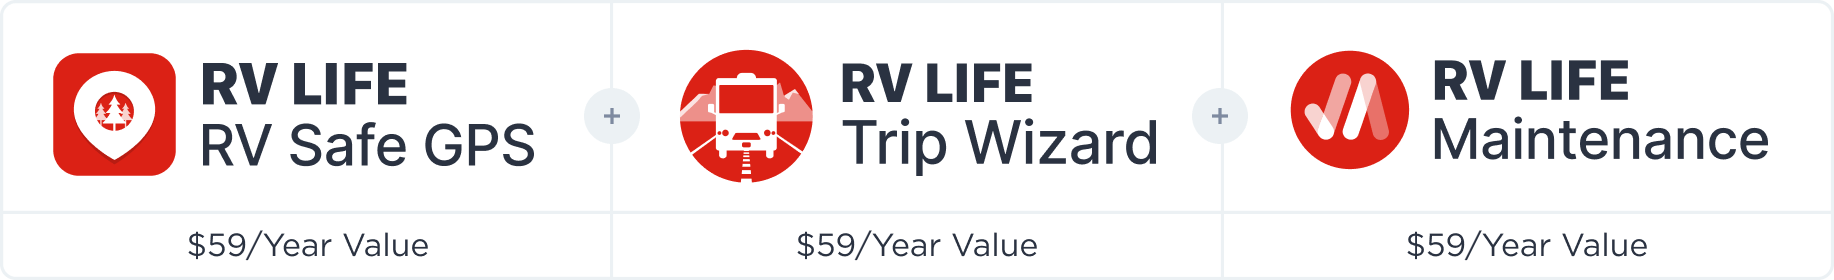 RV LIFE Pro Bundle Logos